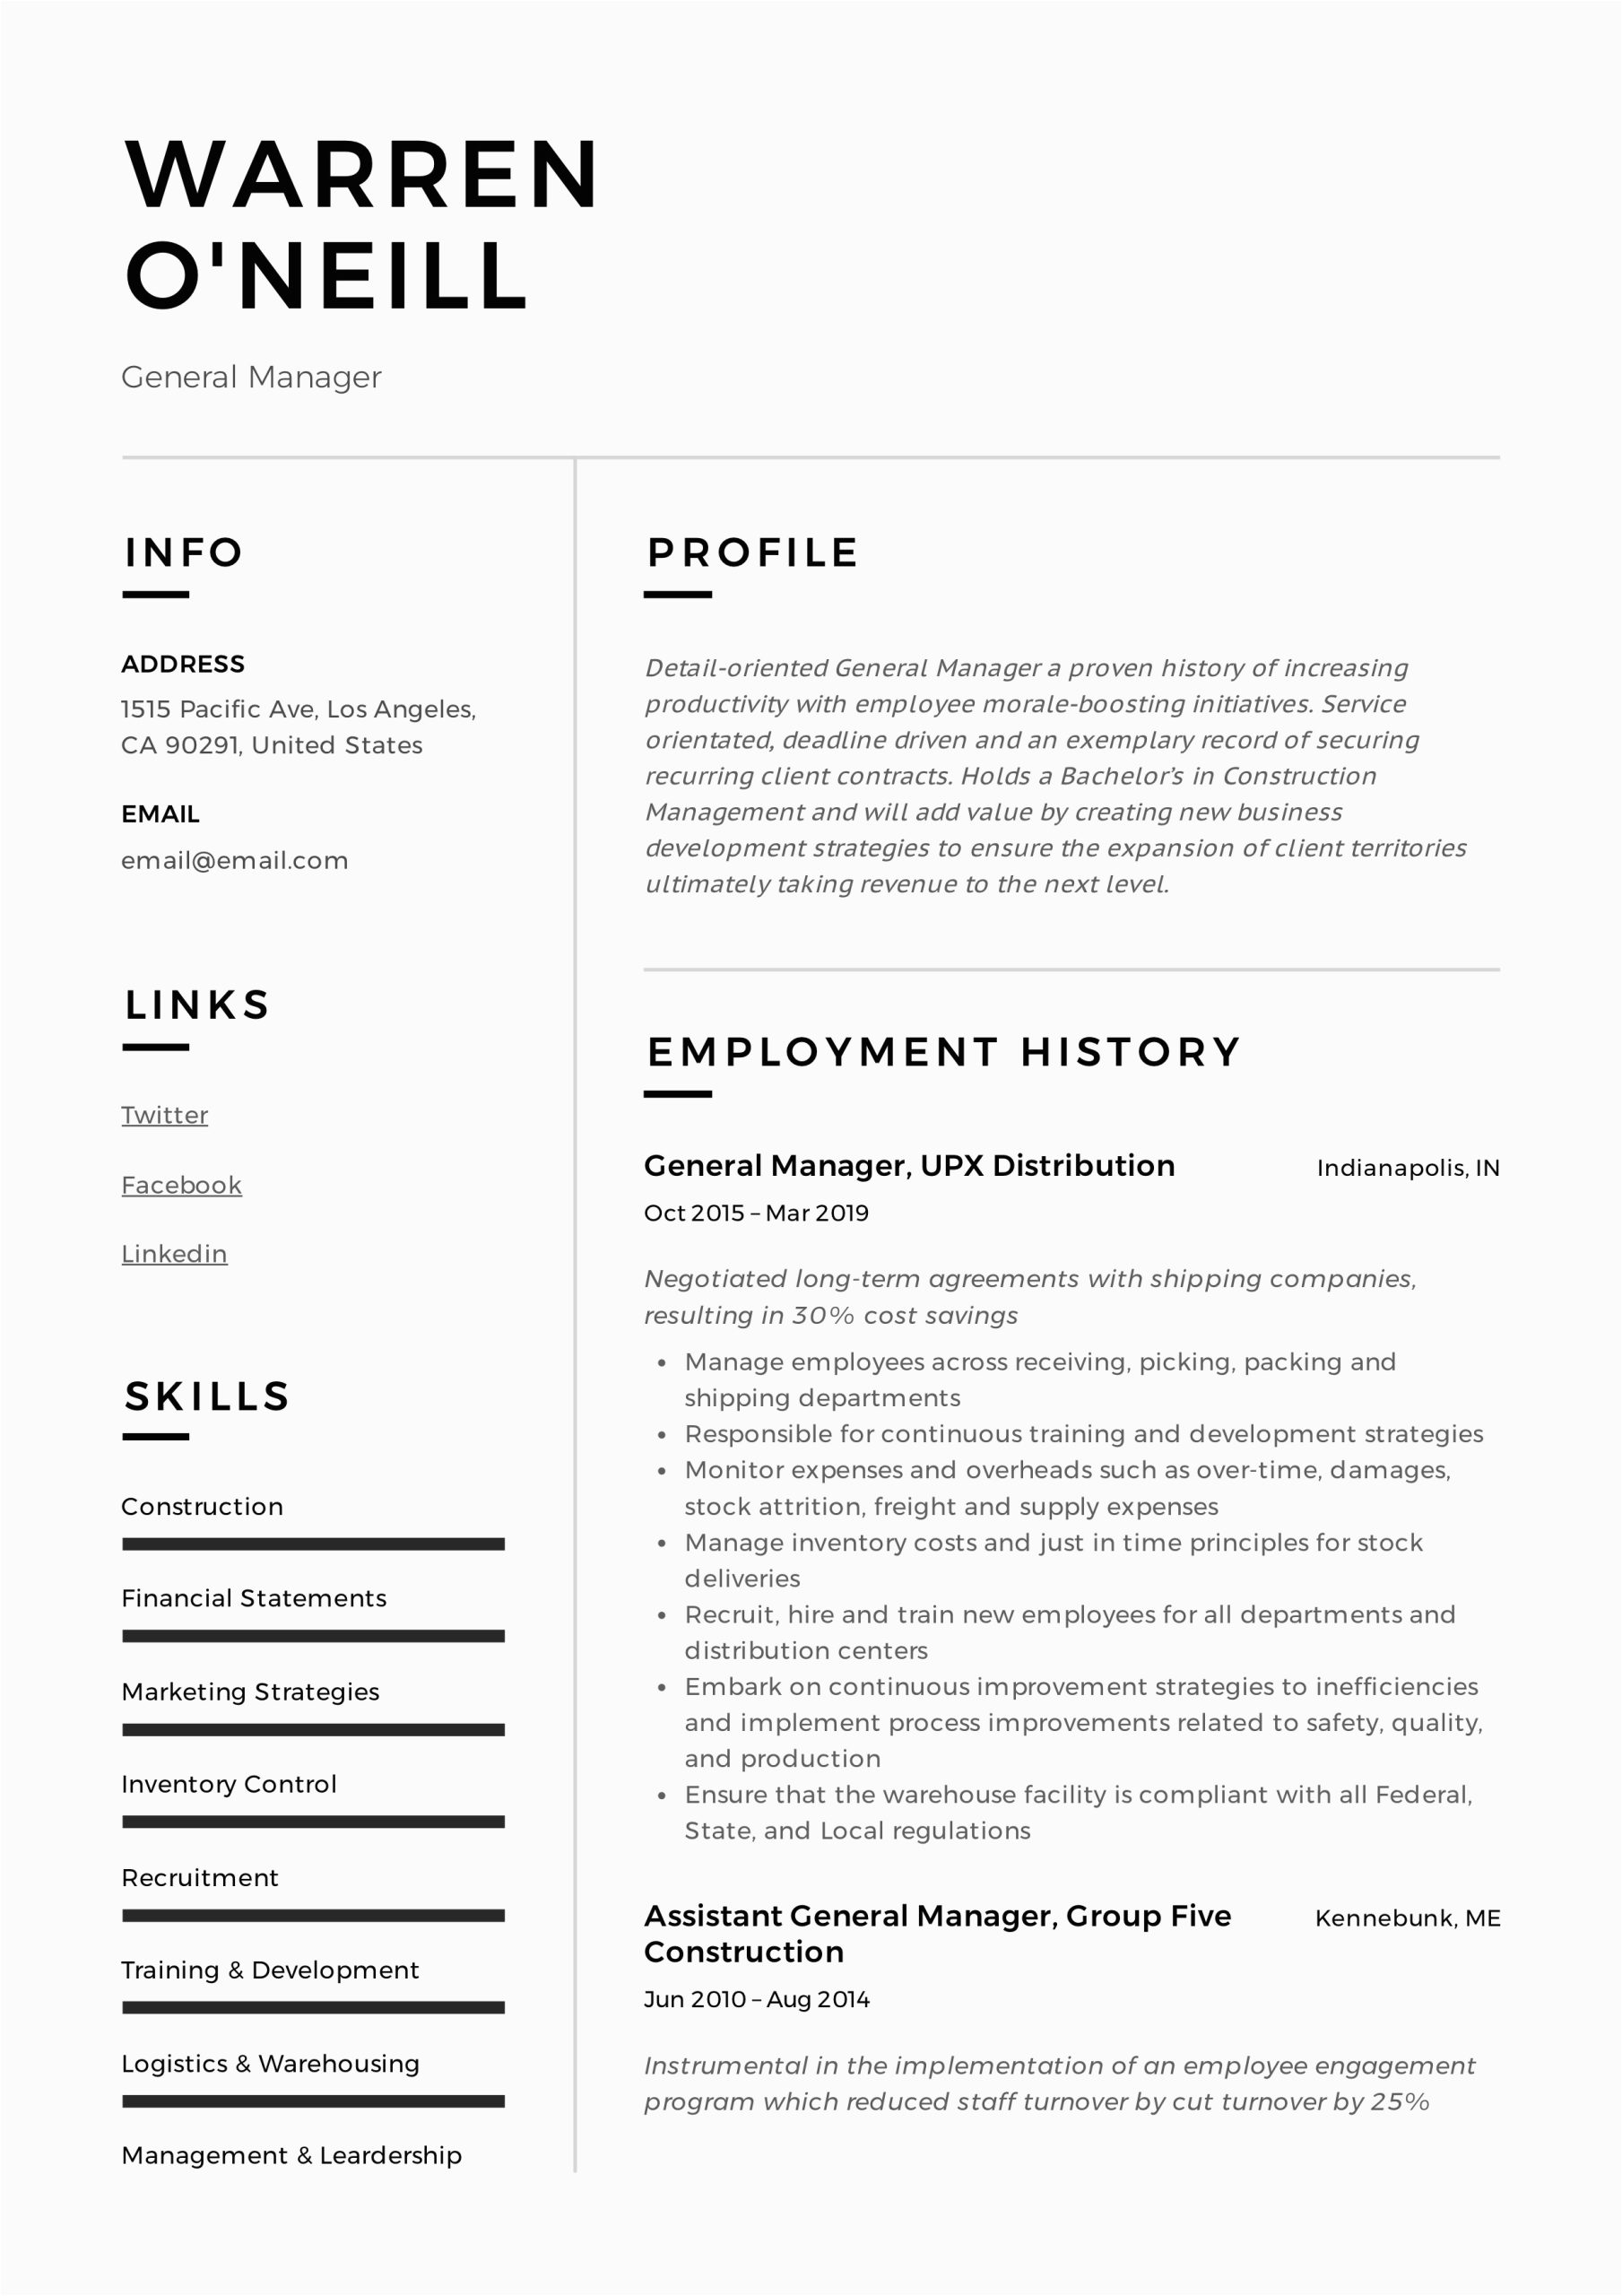 Free Resume Samples Online for General Manager General Manager Resume & Writing Guide 12 Resume Examples